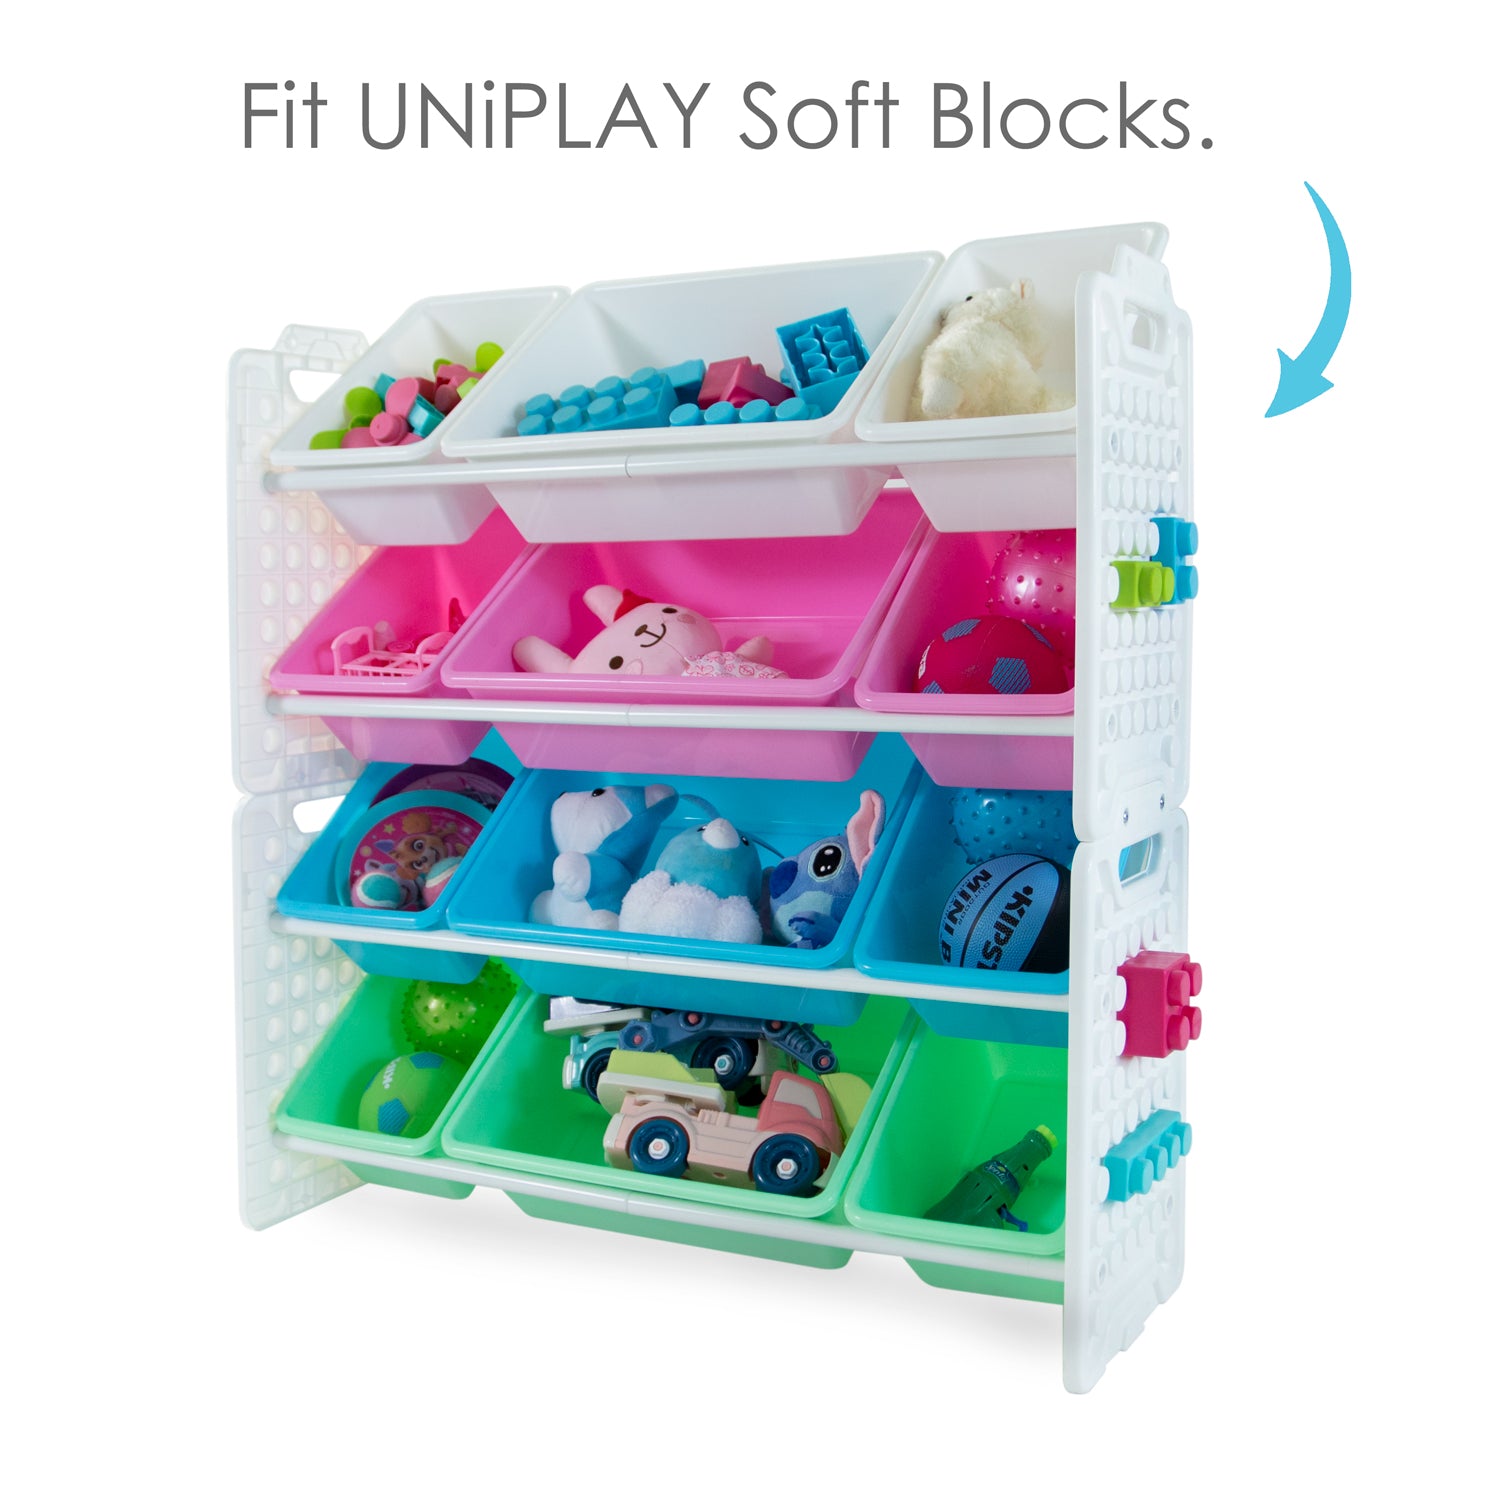 UNiPLAY 12 Bins Toy Storage Organizer - Pink (UB45631)